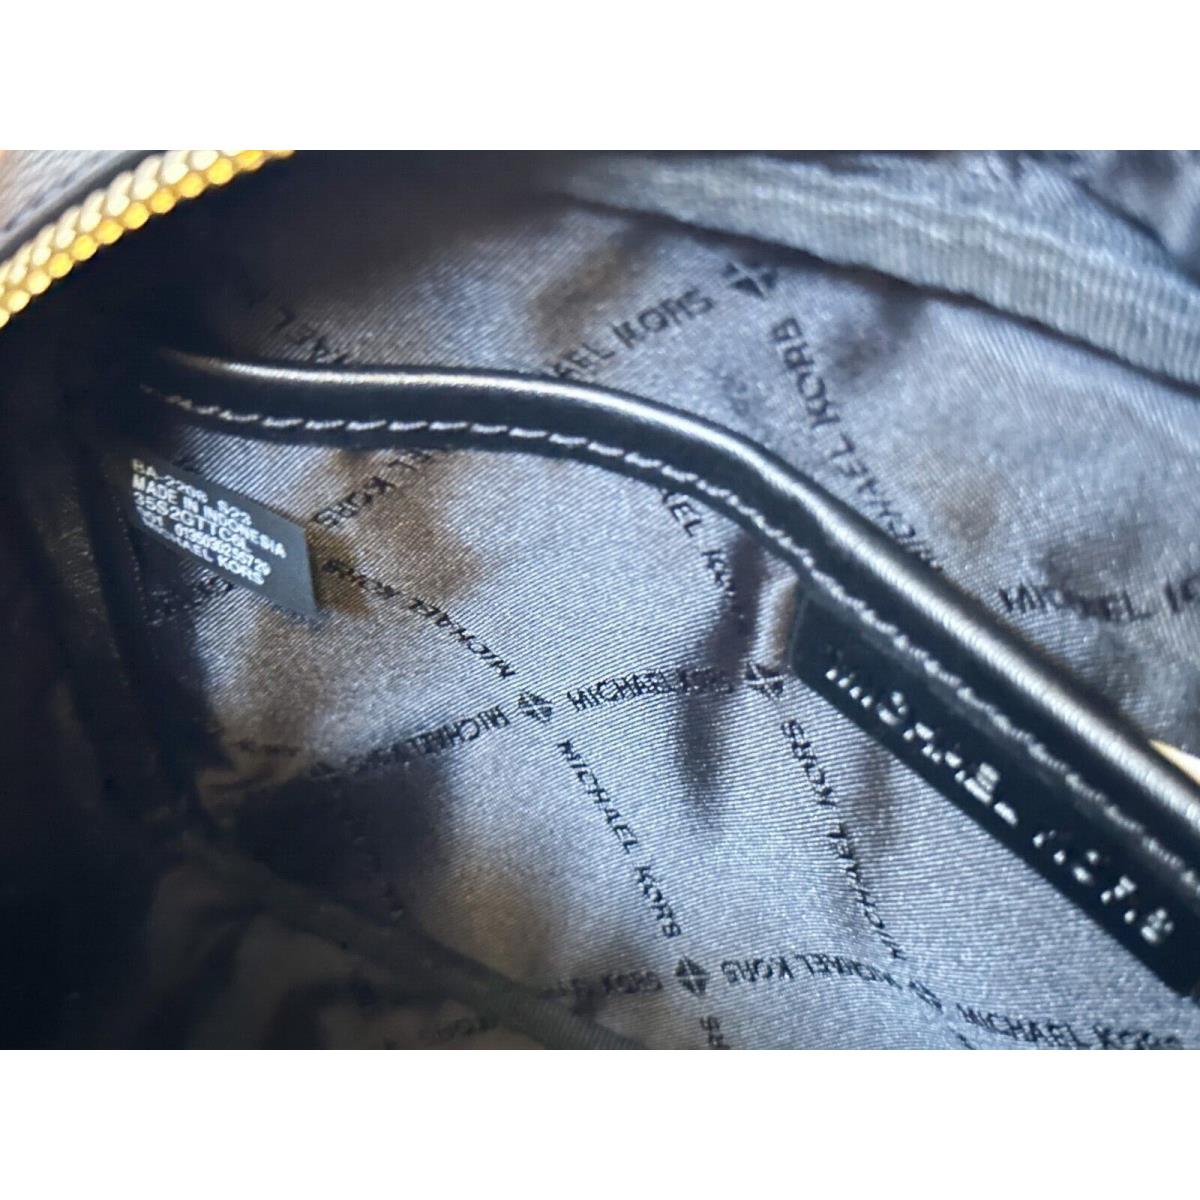 Michael Kors Jet Set Medium Crossbody Bag Tech Accessories Attached Tea Rose